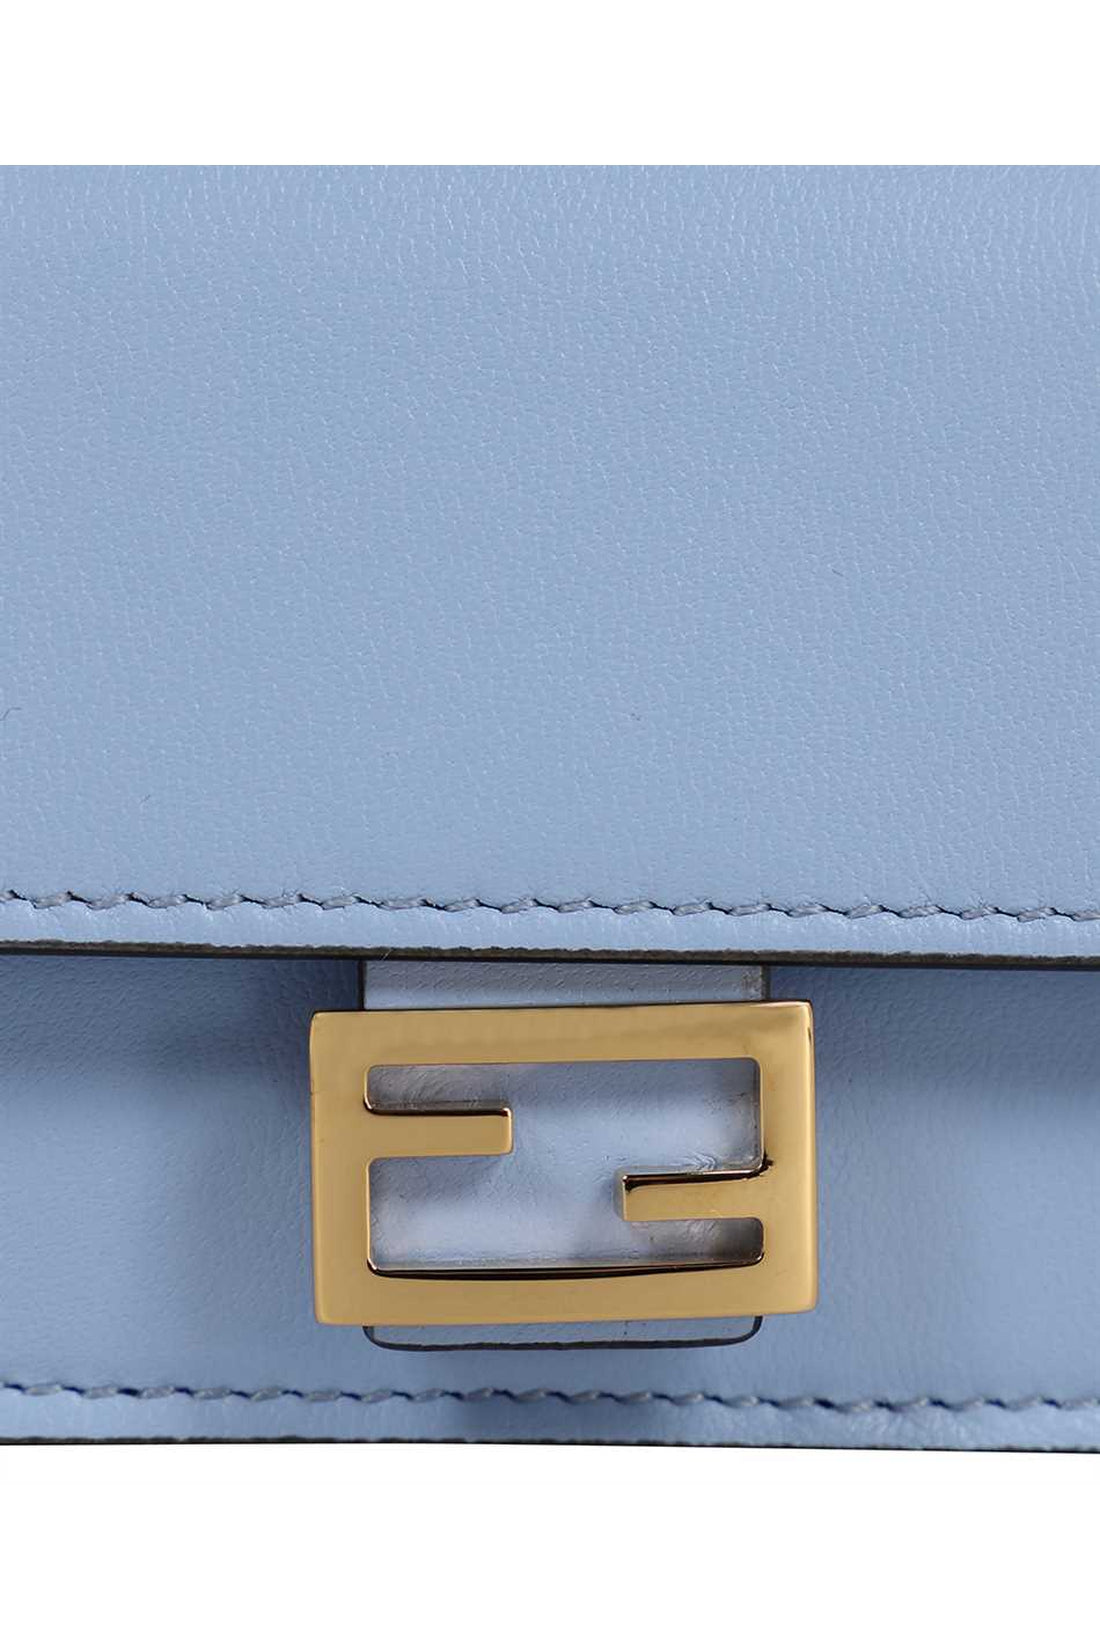 Fendi-OUTLET-SALE-Baguette leather card holder-ARCHIVIST